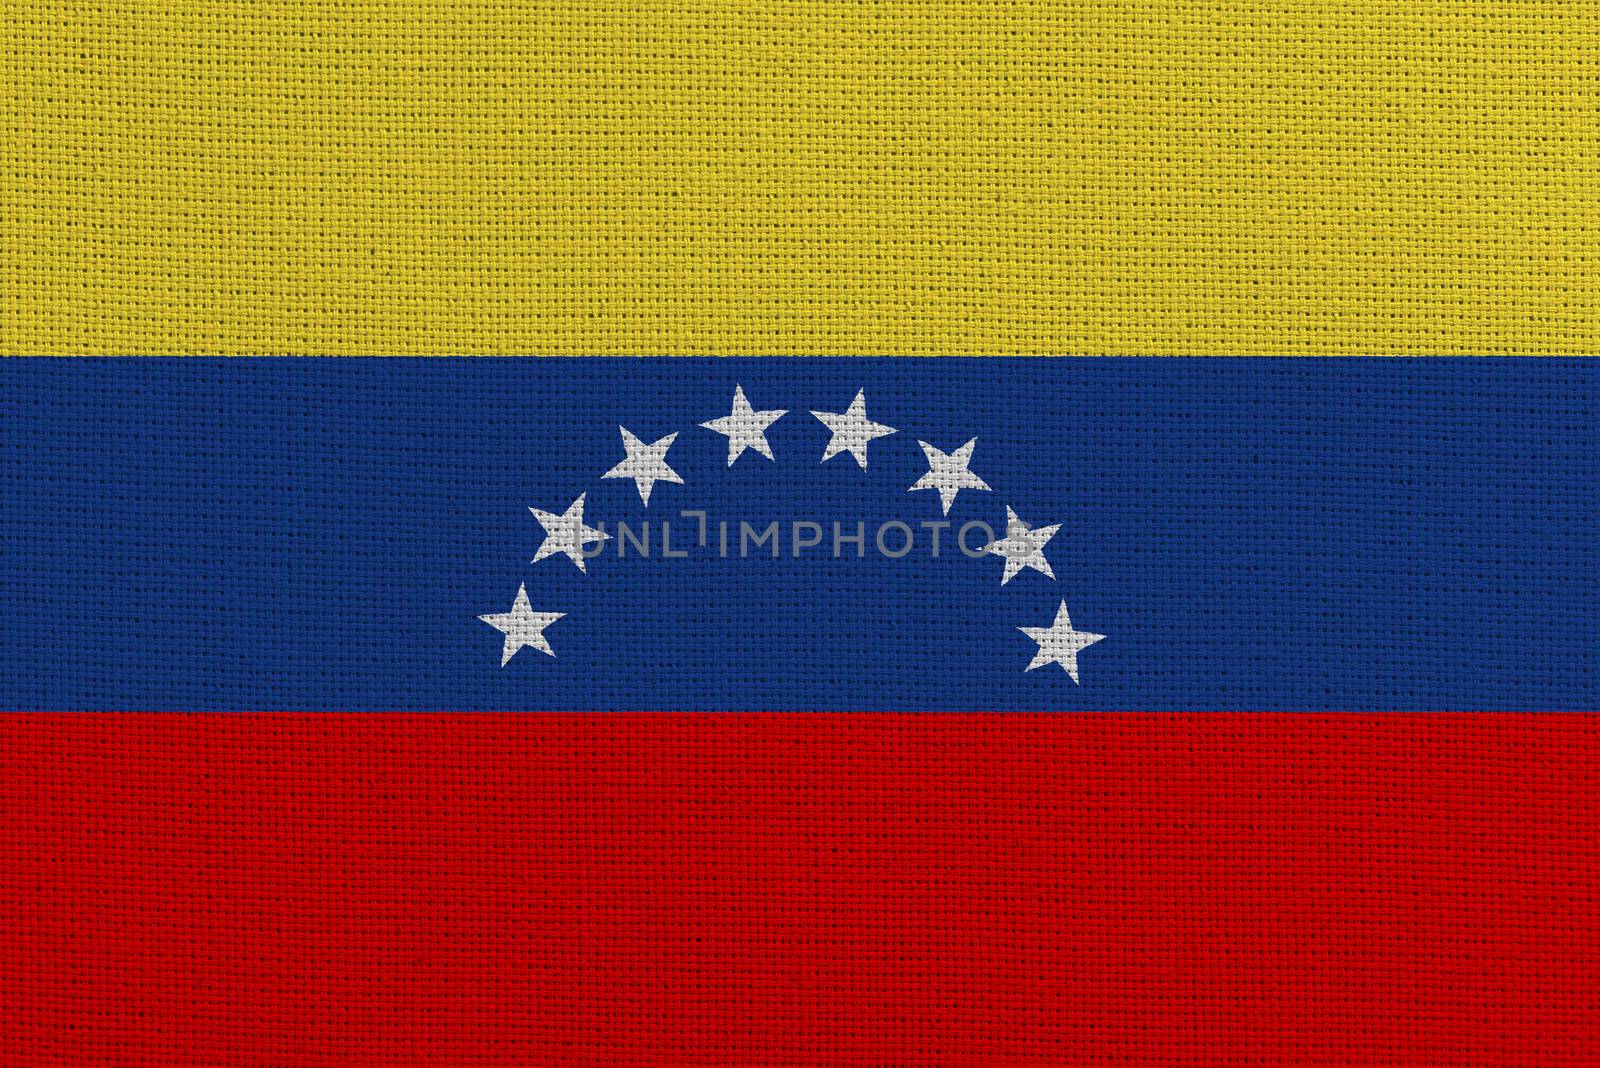 Venezuela fabric flag. Patriotic background. National flag of Venezuela